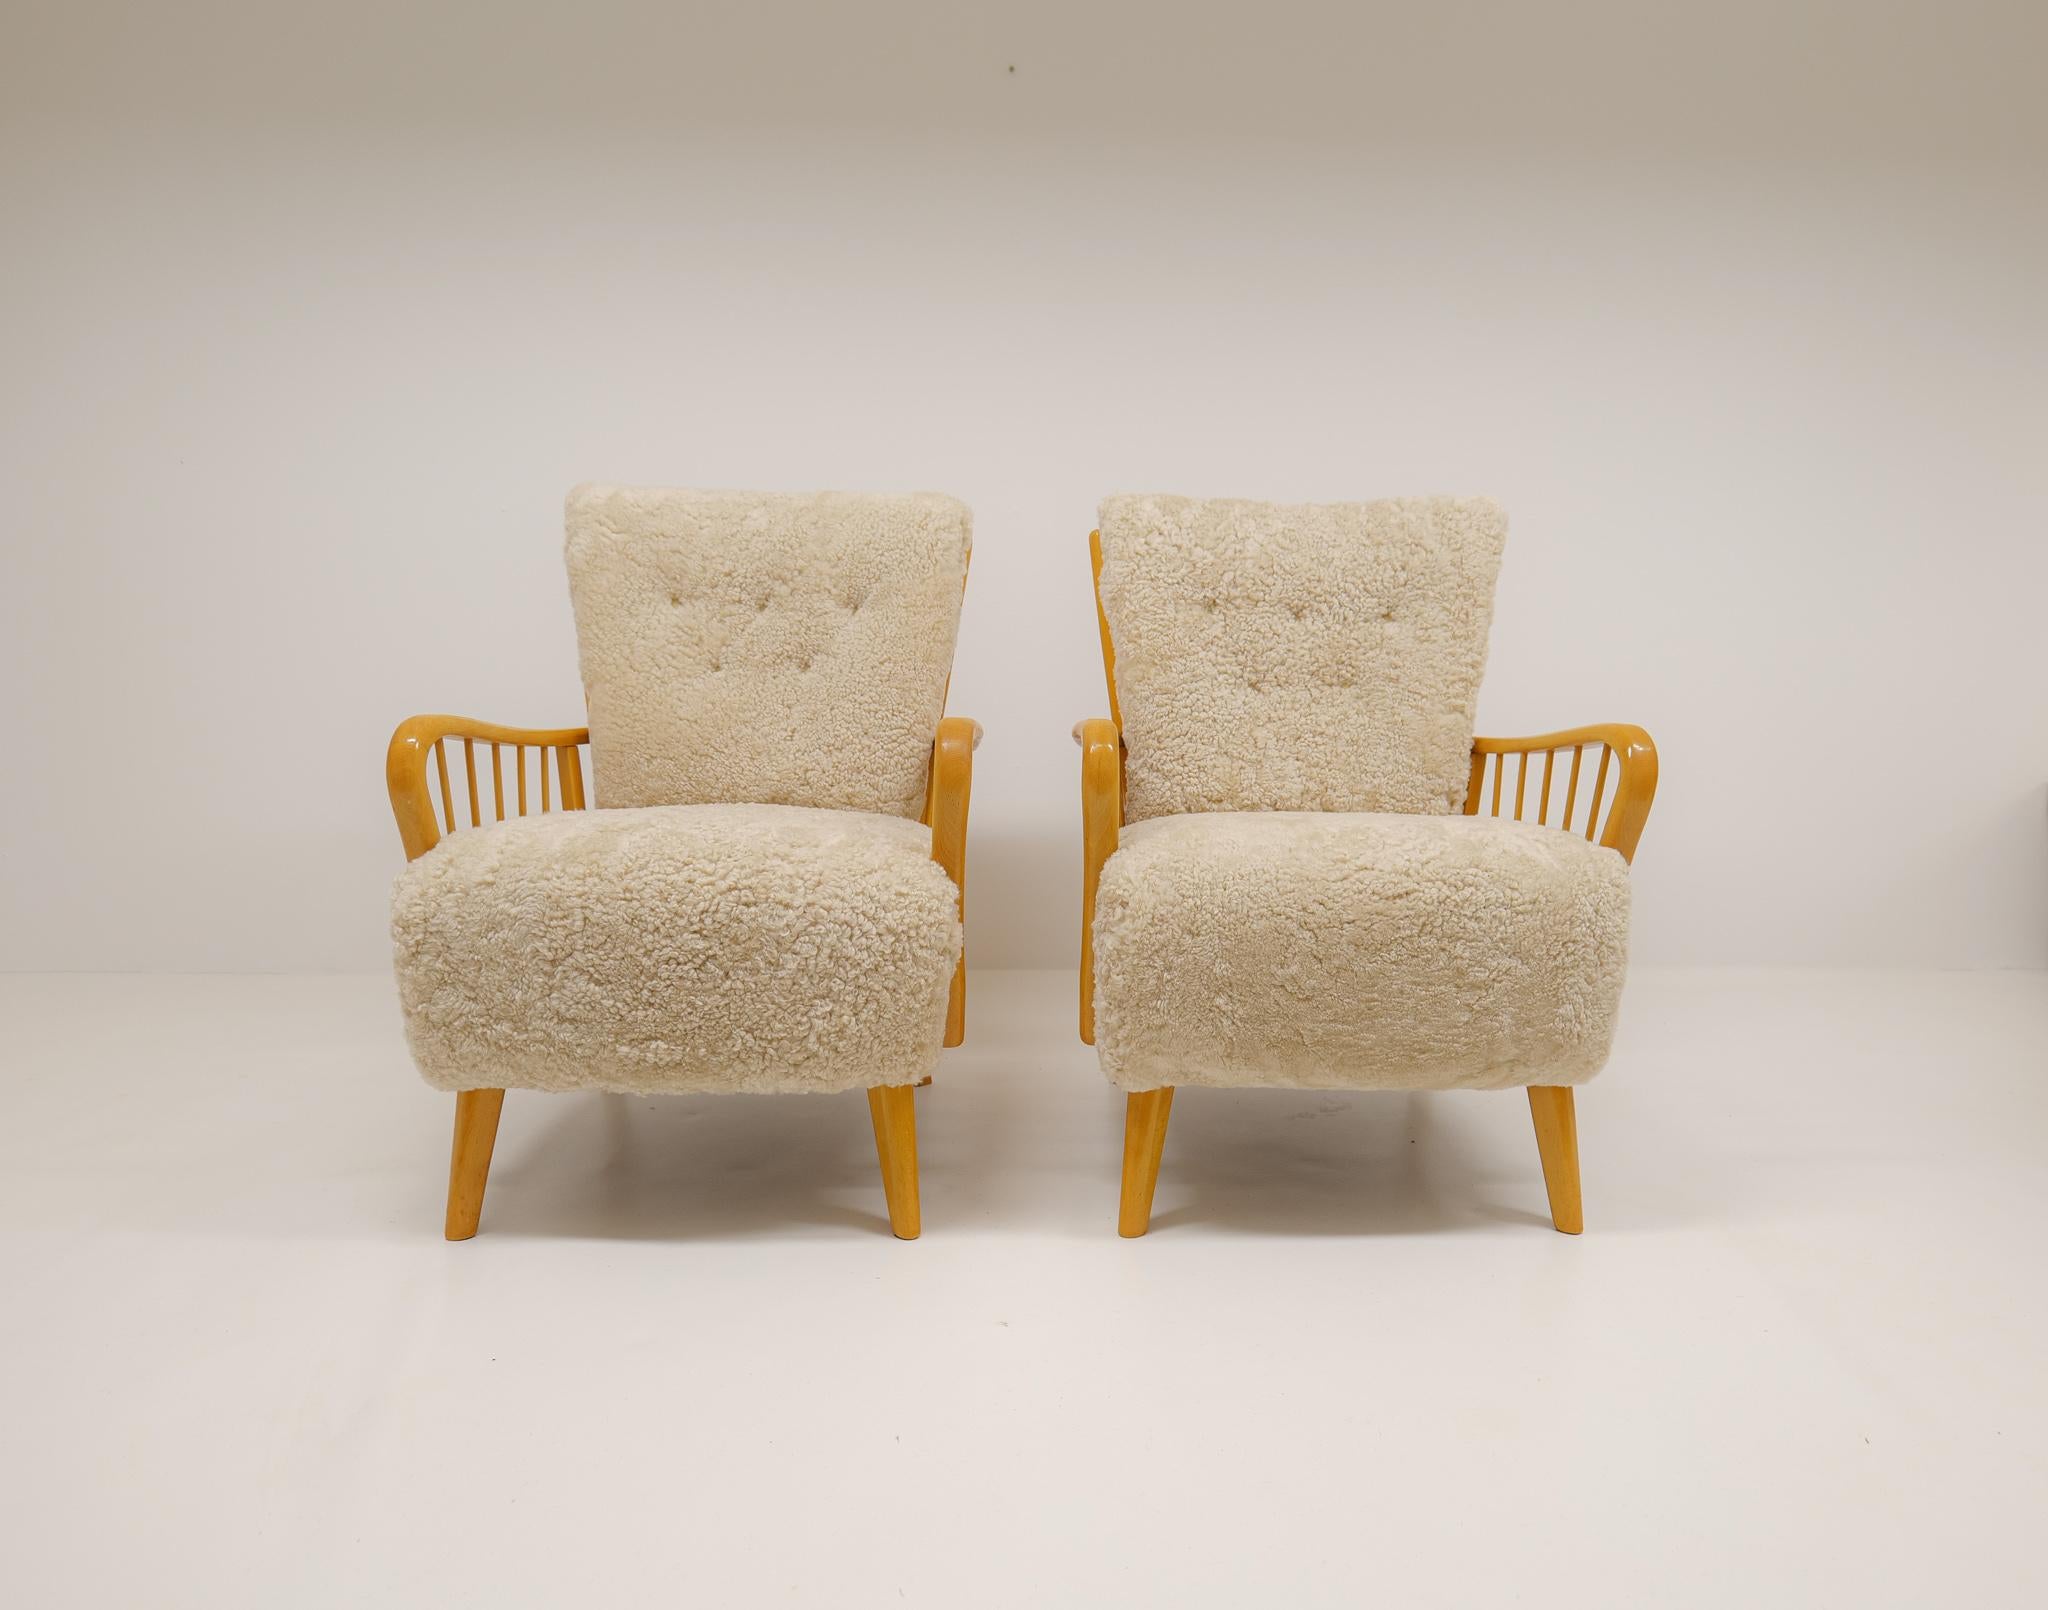 Art Deco Swedish Grace Lounge Chairs in Shearling / Sheepskin 1940s Sweden For Sale 9